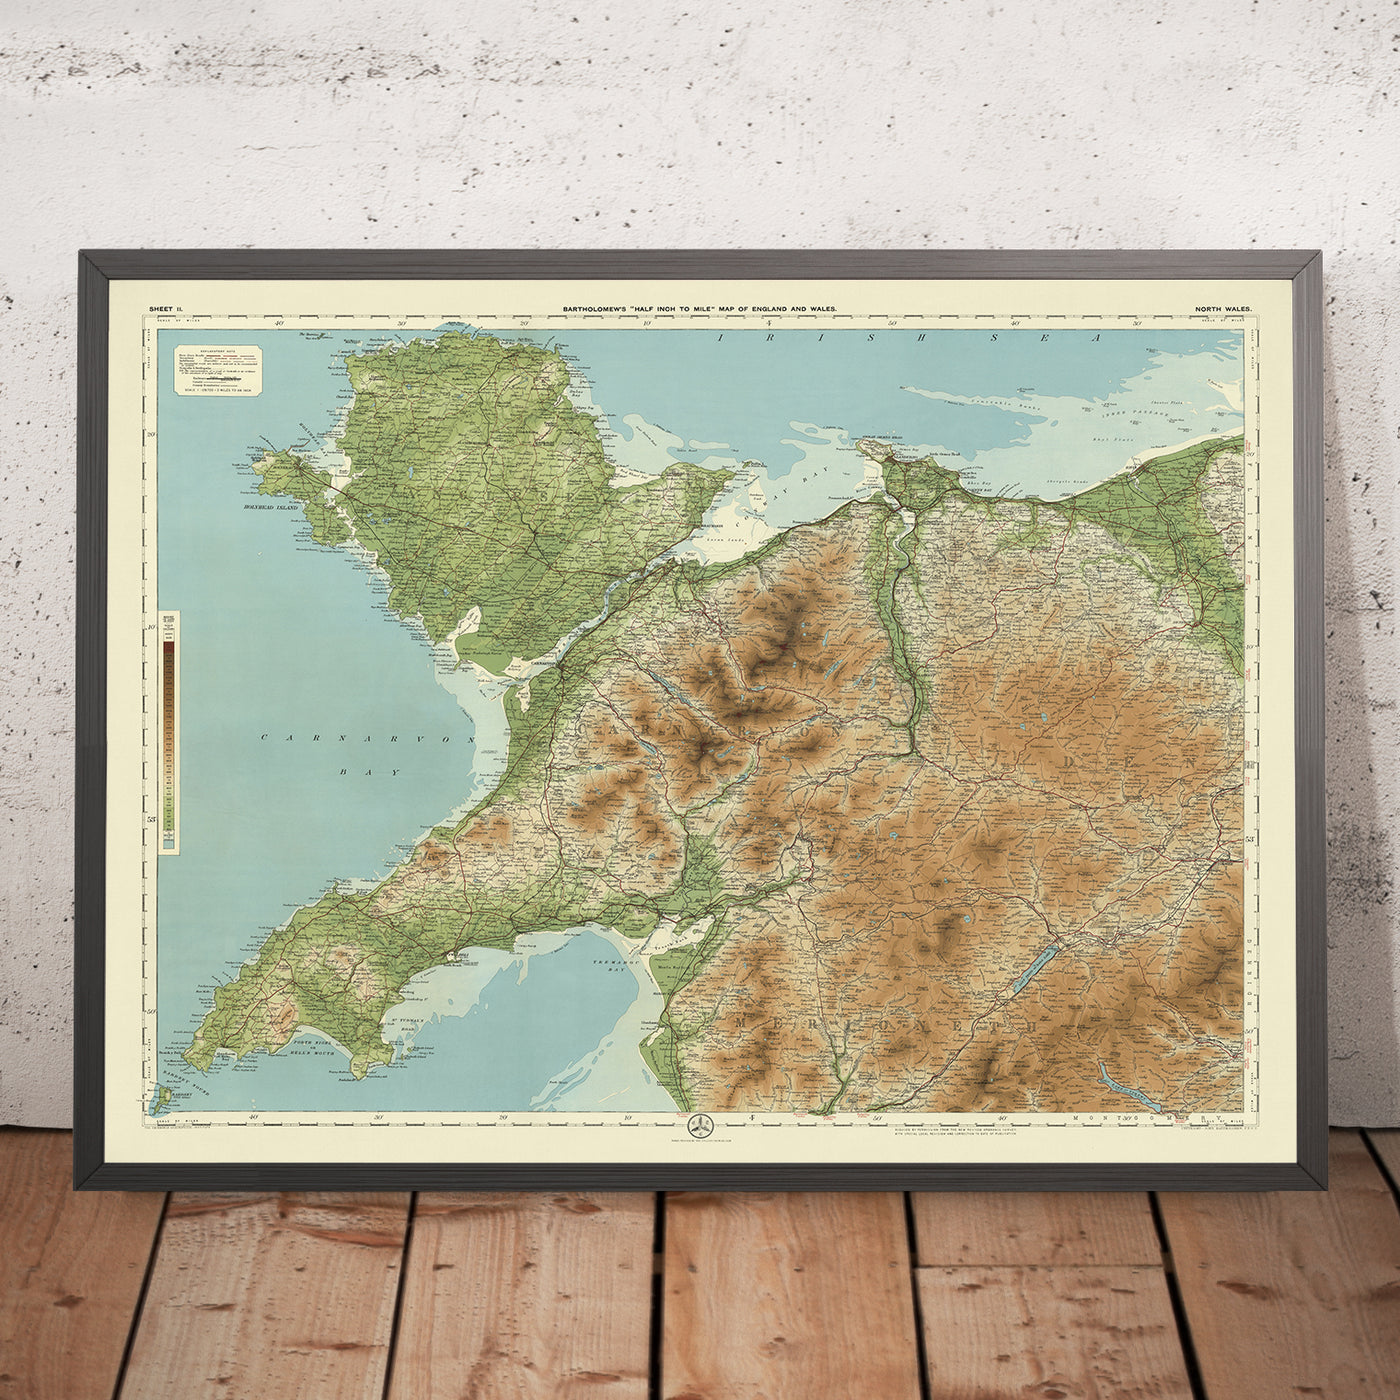 Ancienne carte OS du nord du Pays de Galles par Bartholomew, 1901 : Snowdon, Caernarfon, Llandudno, Menai Strait, Conwy, Bala Lake